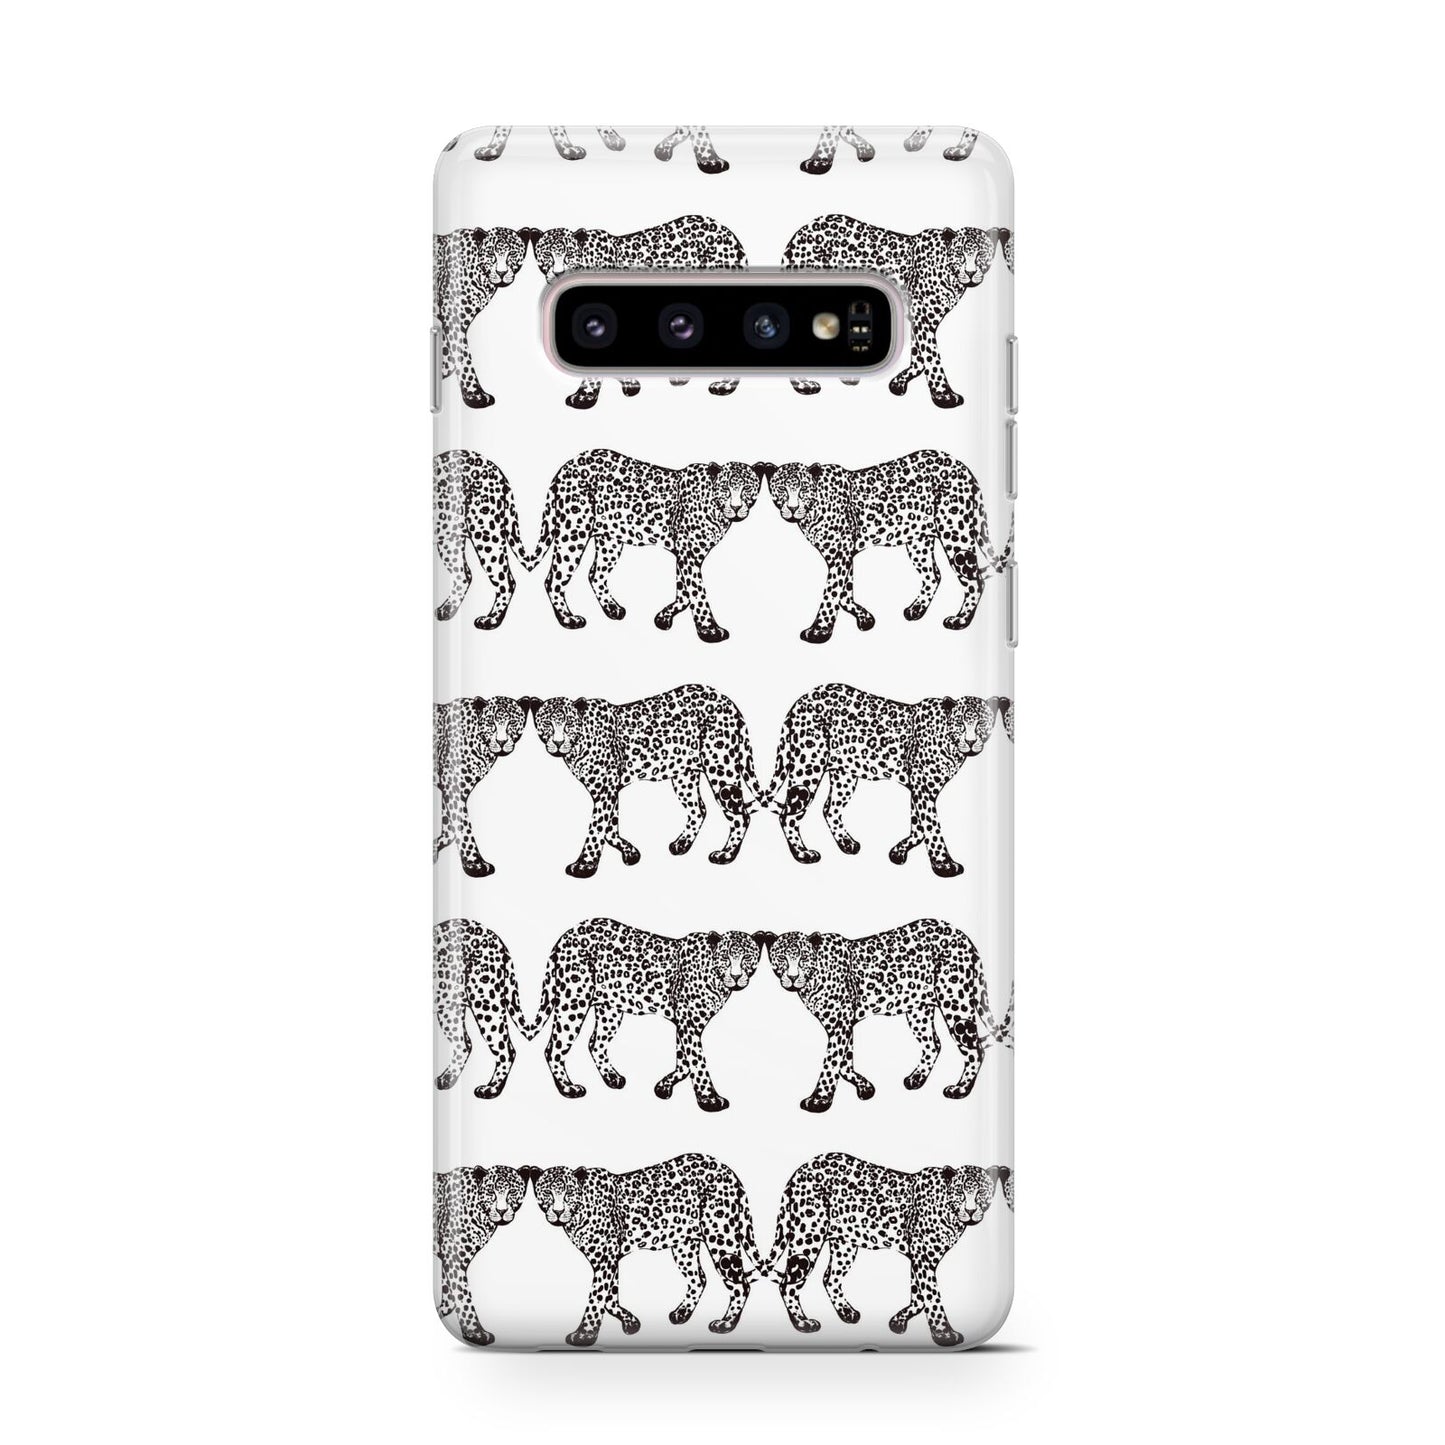 Monochrome Mirrored Leopard Print Samsung Galaxy S10 Case